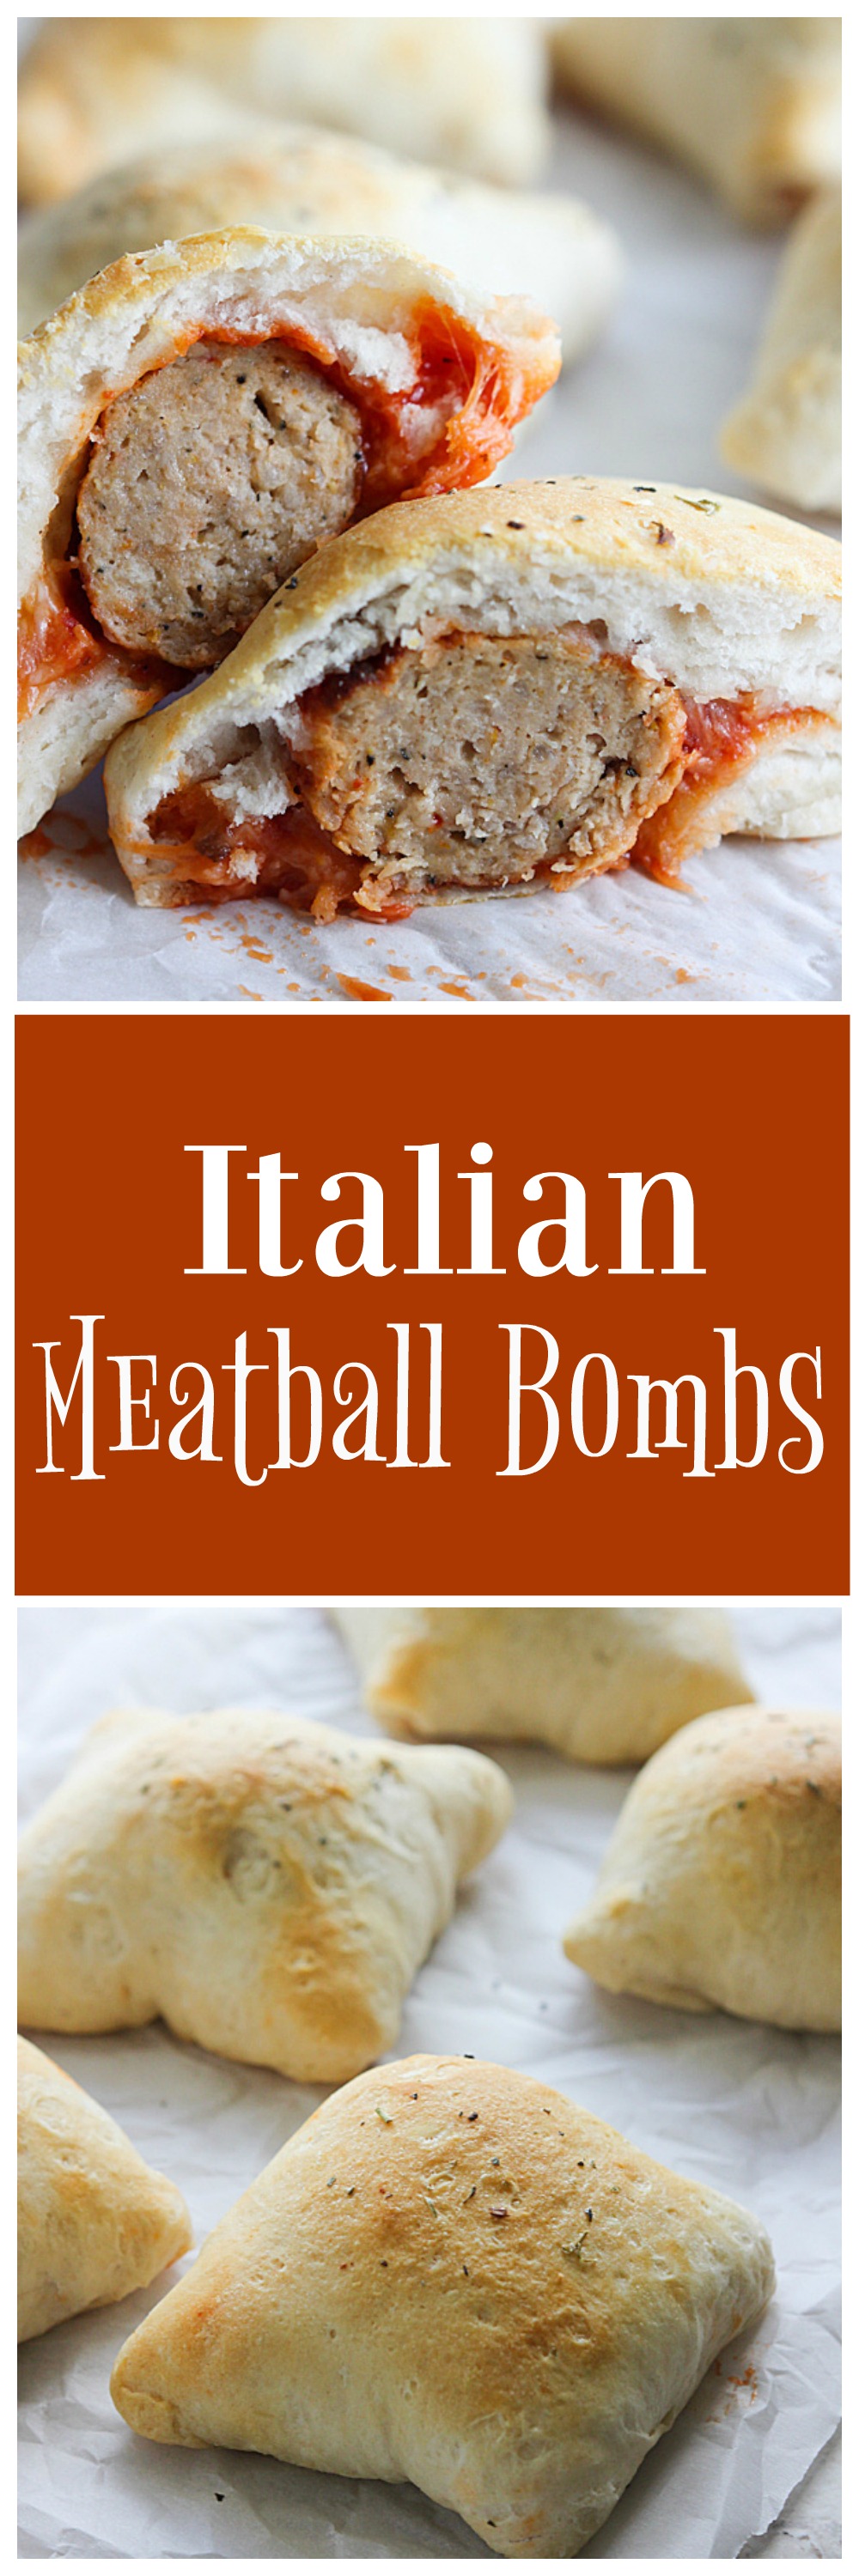 Italian Meatball Bombs